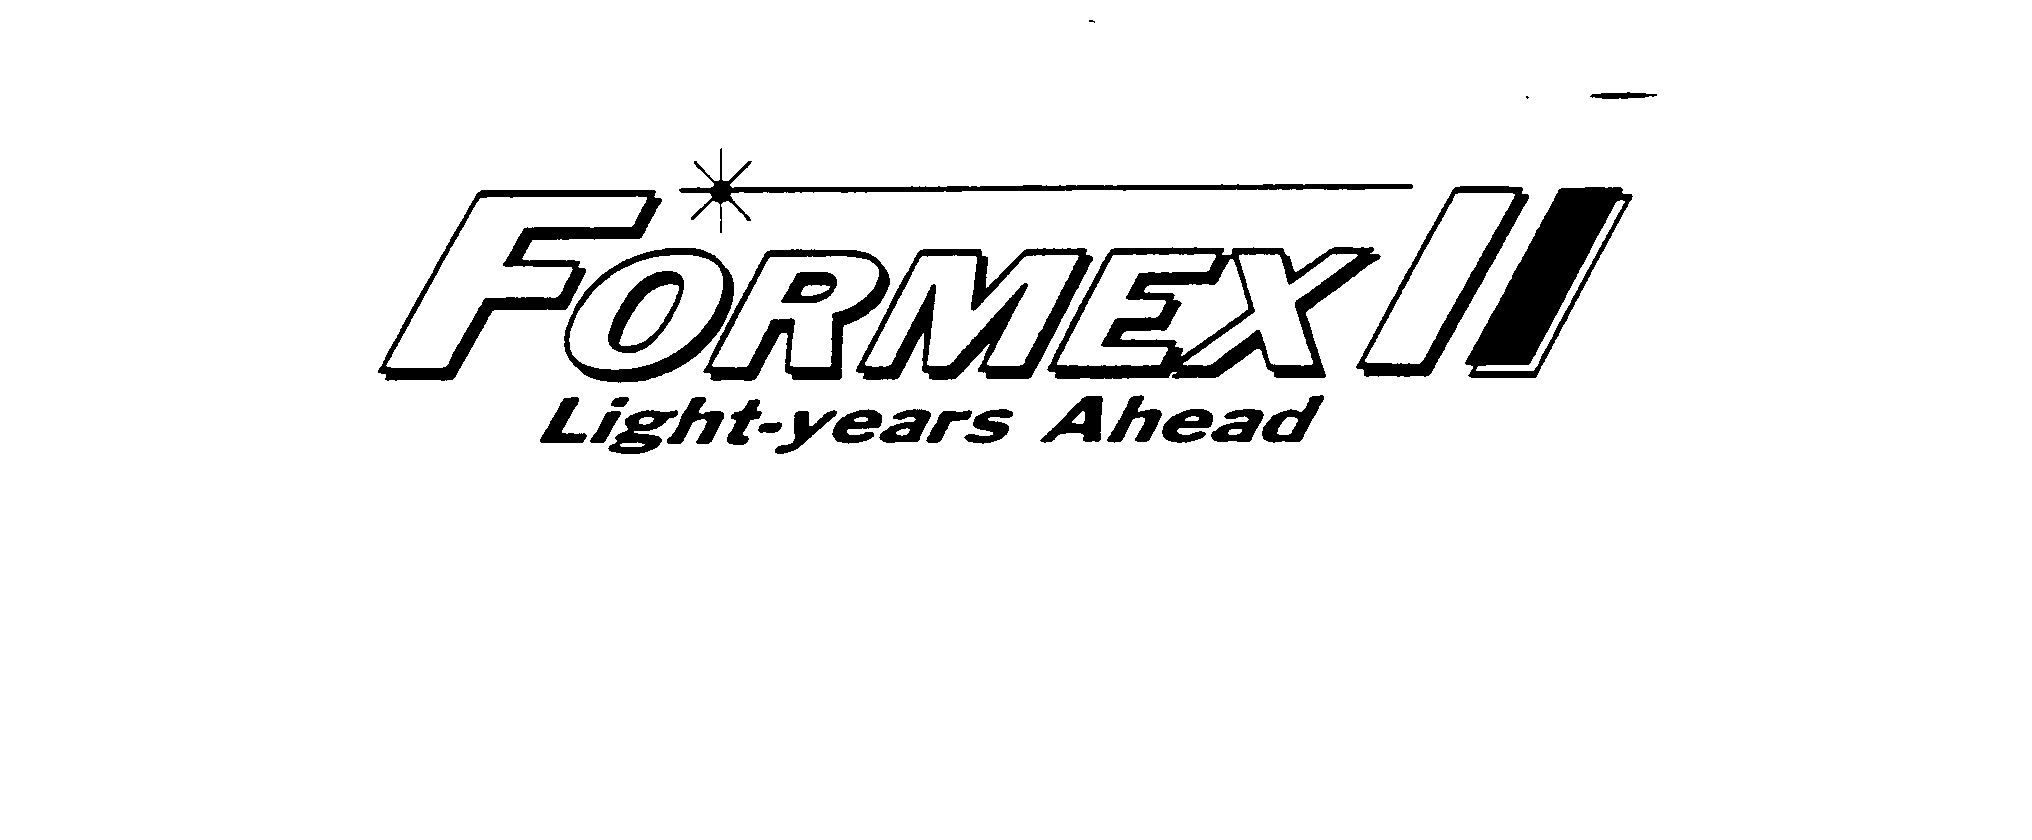  FORMEX II LIGHT-YEARS AHEAD